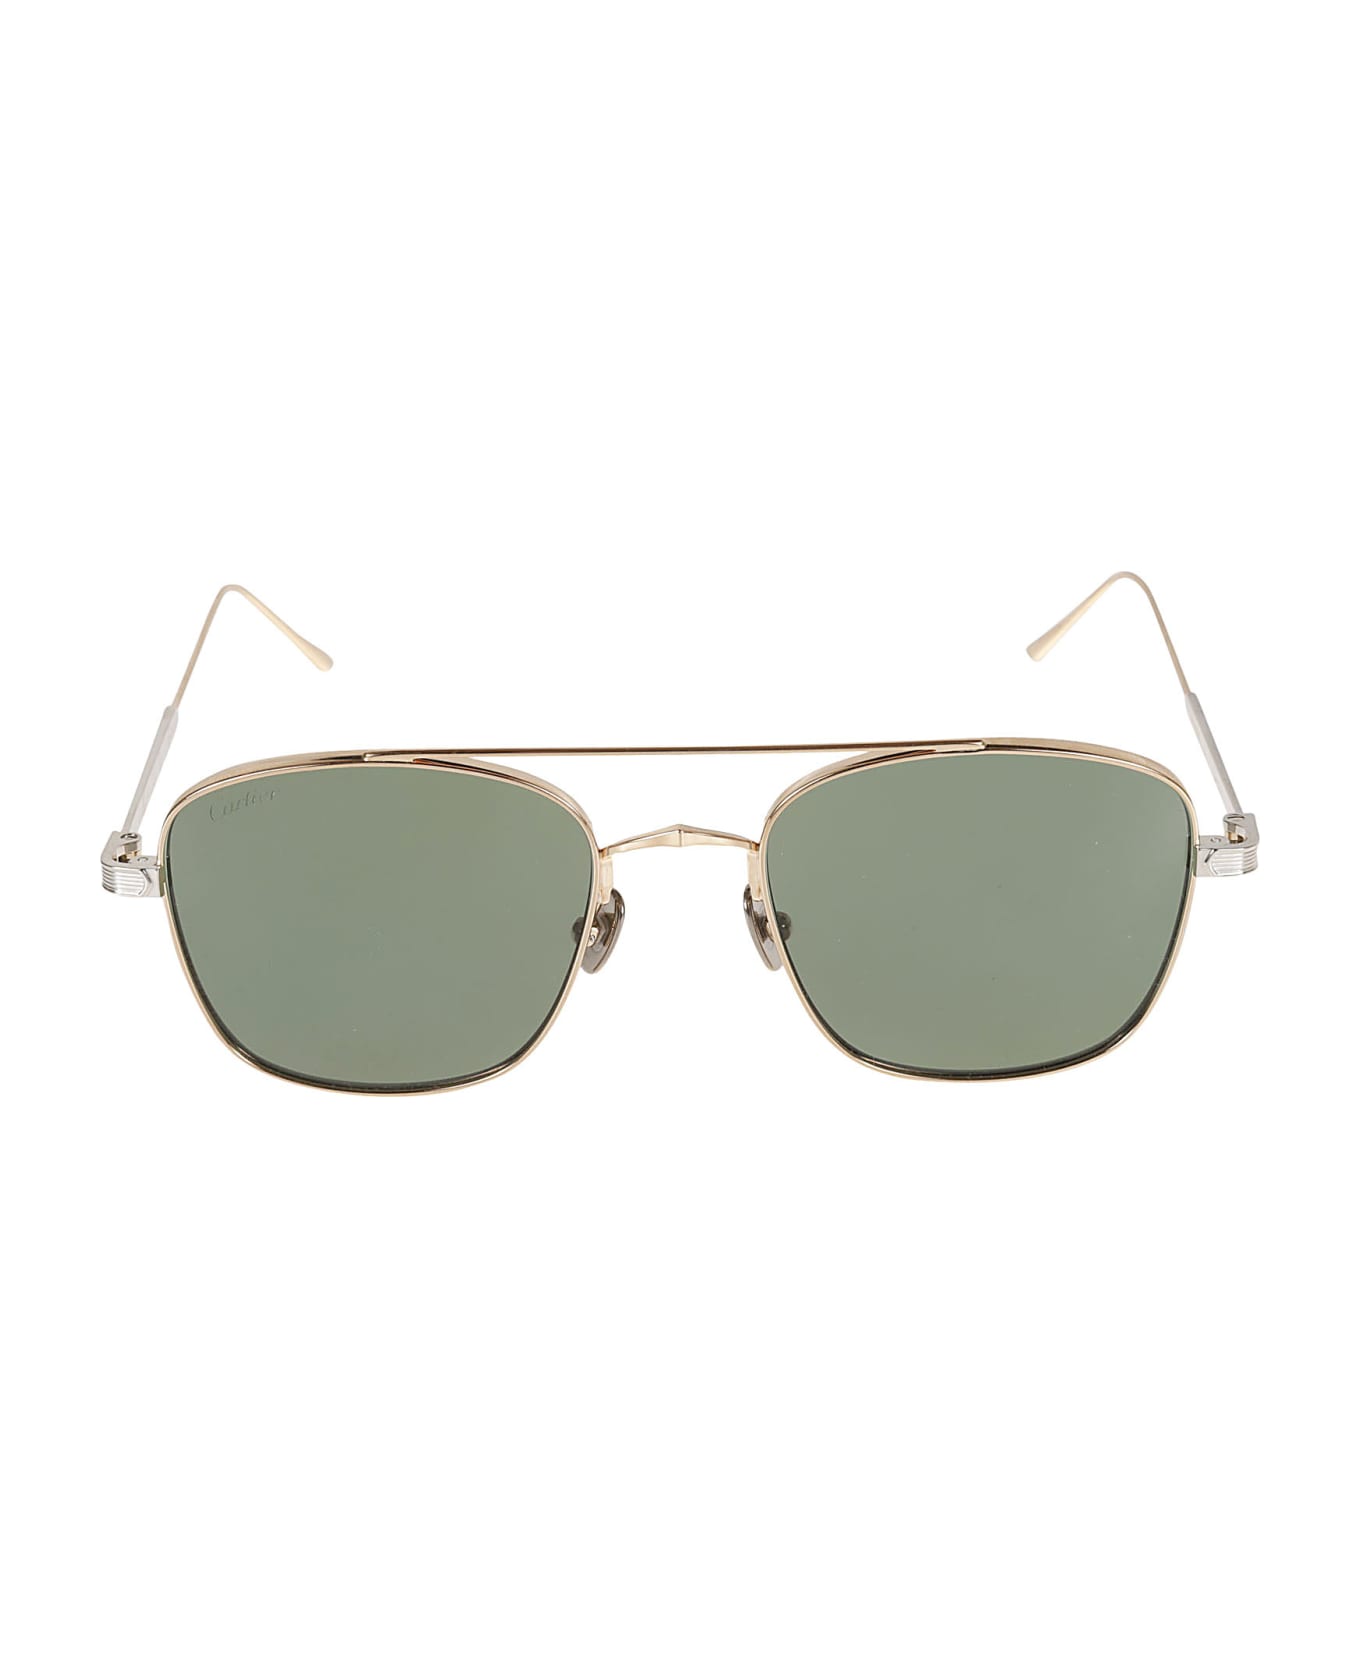 Cartier Eyewear Aviator Square Sunglasses - Silver/Green